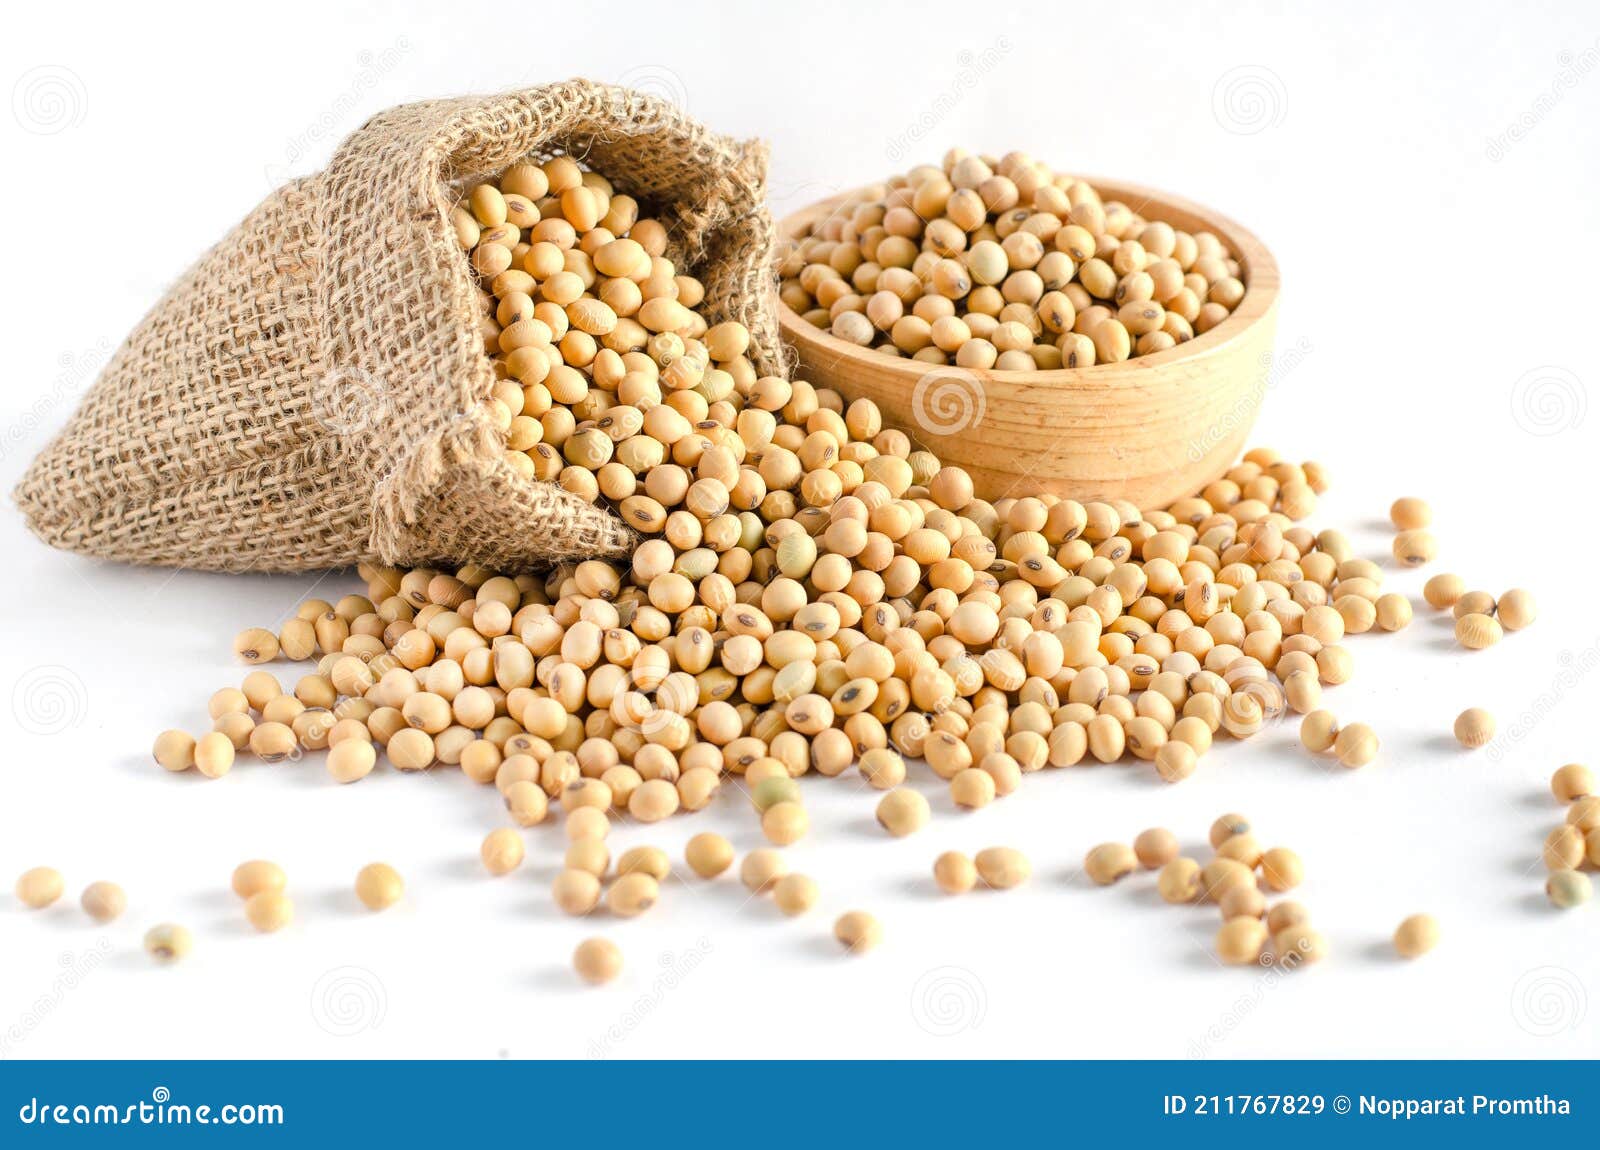 Soybean Hemp Sack Bag Oil Laboratory Stock Photo 412824748 | Shutterstock